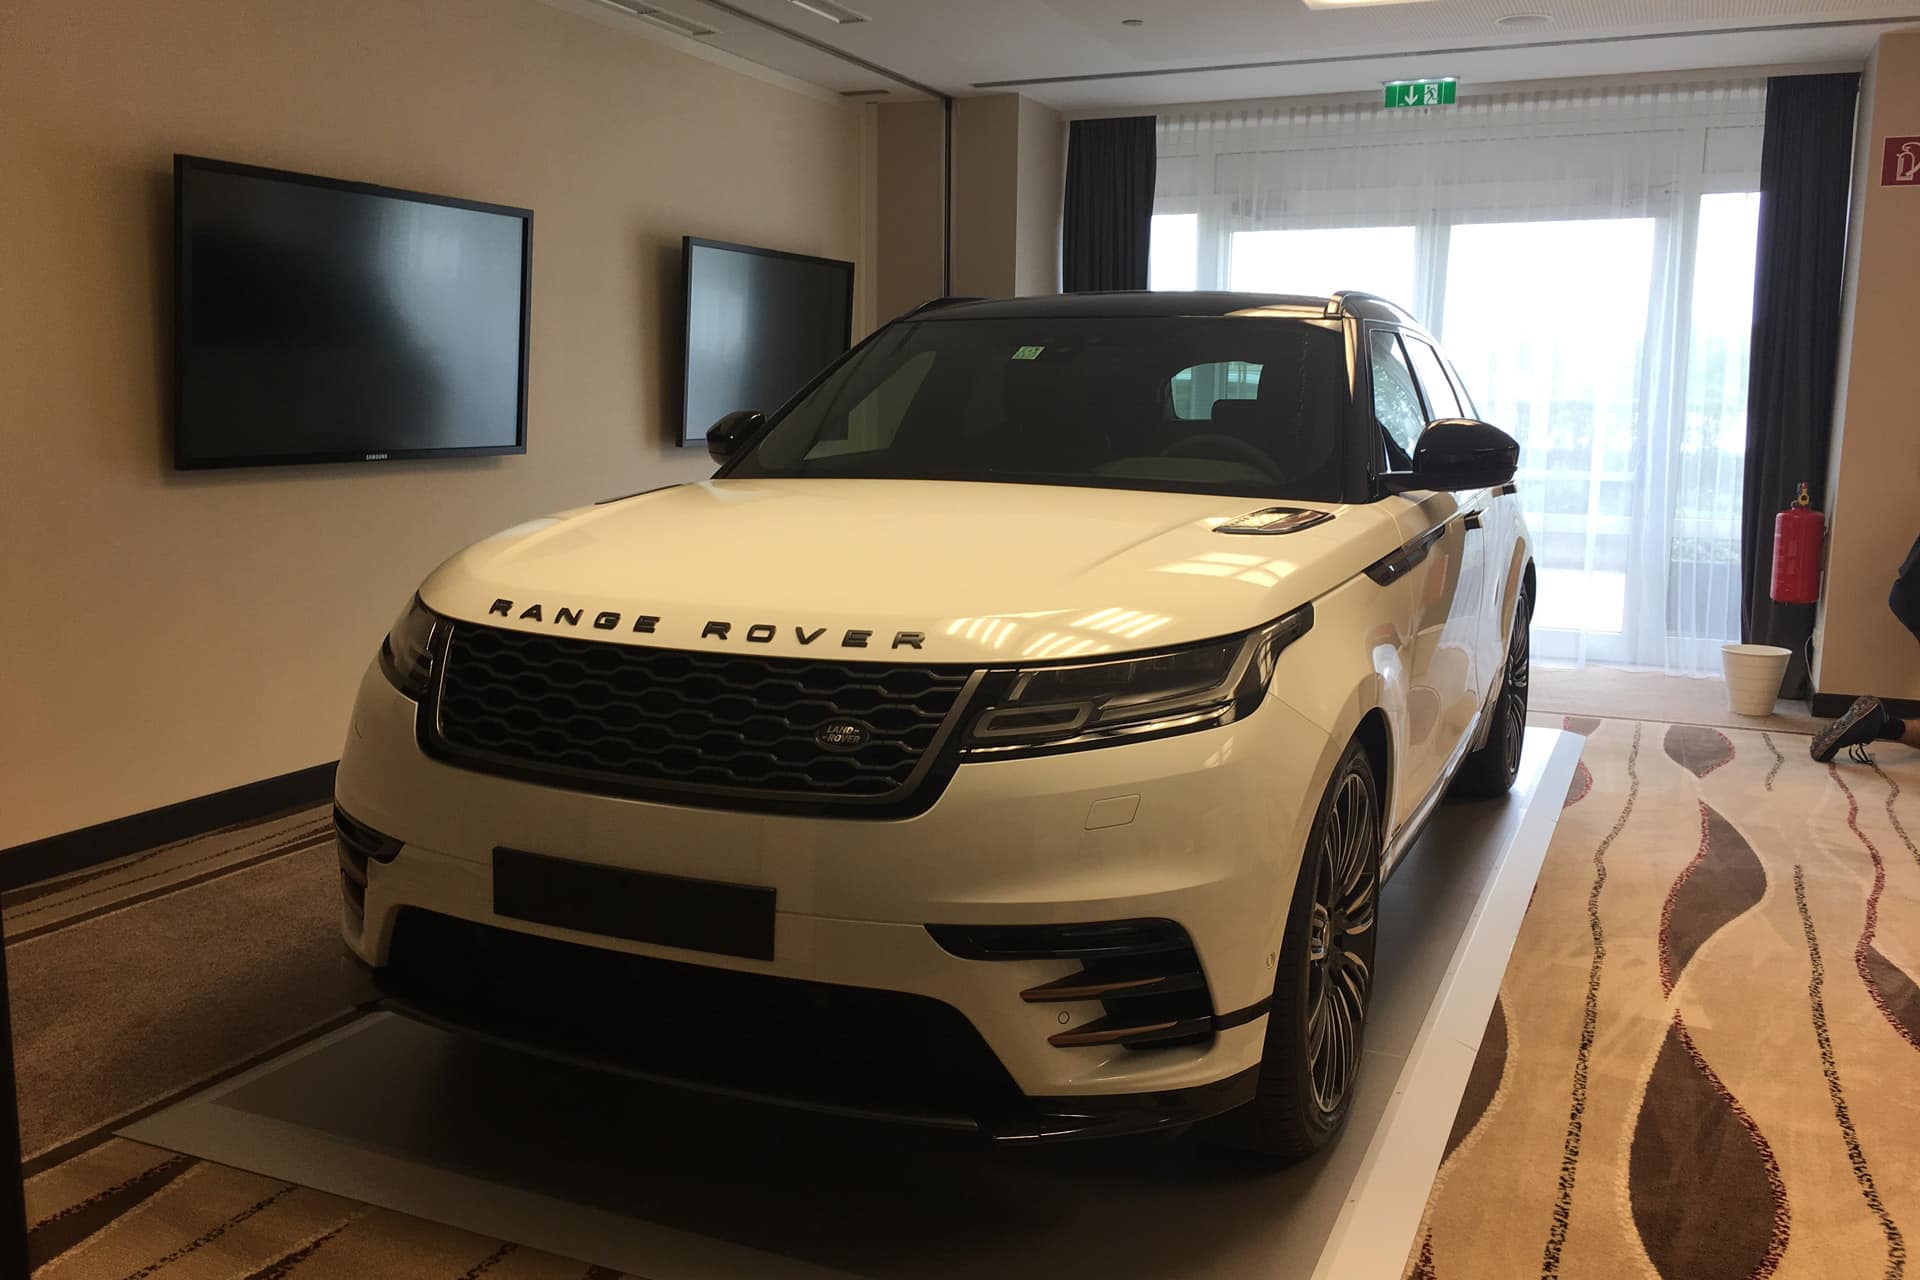 New-Range-Rover-Velar-Retailer-Training-in-Vienna-7